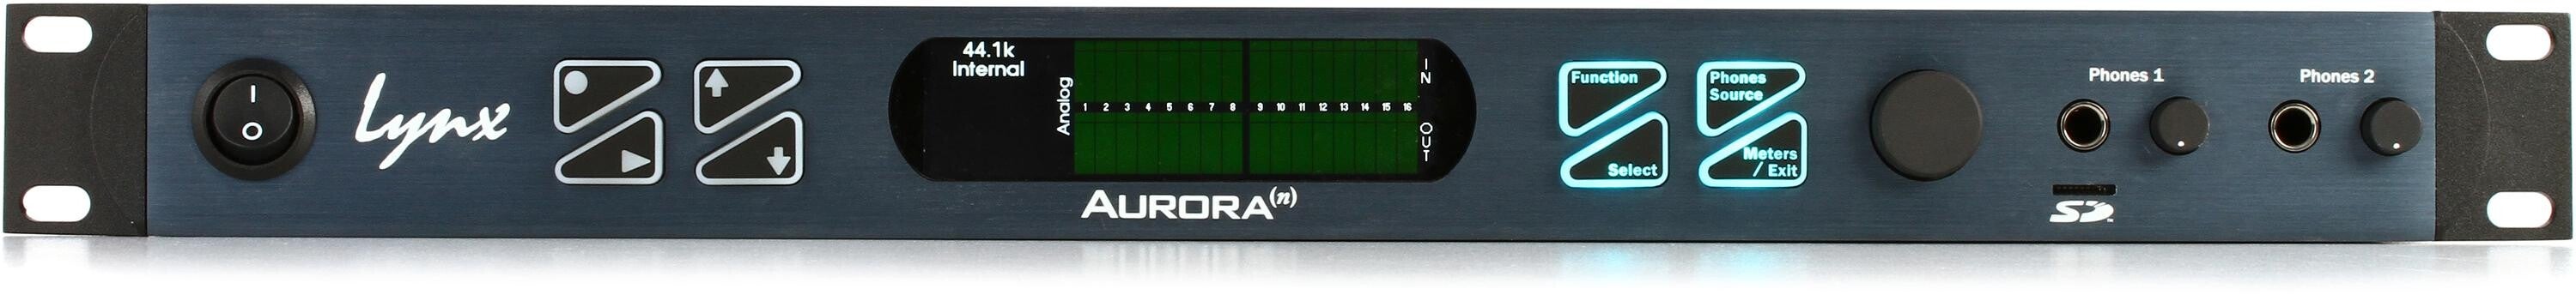 Lynx Aurora (n) 32-HD2 32-channel AD/DA Converter with HDX Interface